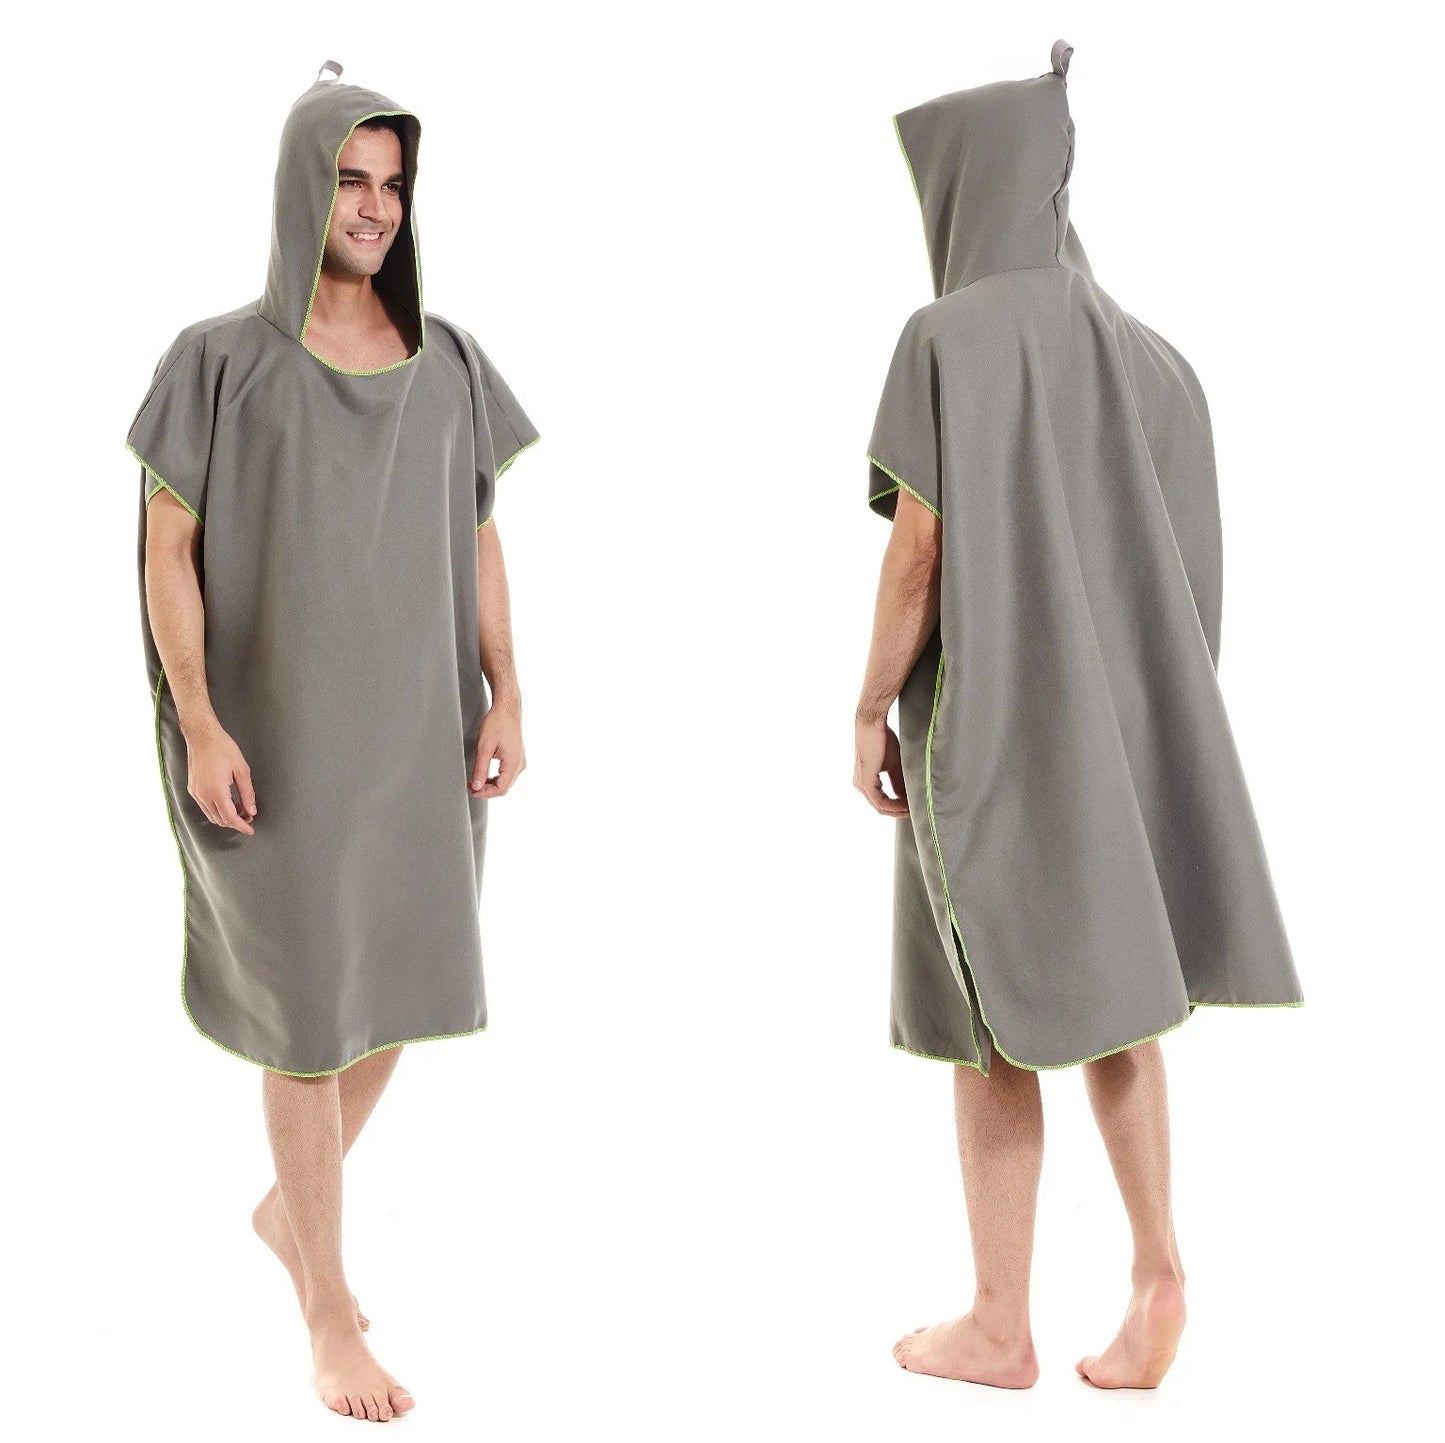 Microfiber Hooded Towel Men Women for Swim Beach Travel Quick Dry Changing Robe Cape Bath Towel Bathrobe Surf Poncho Sauna Playa